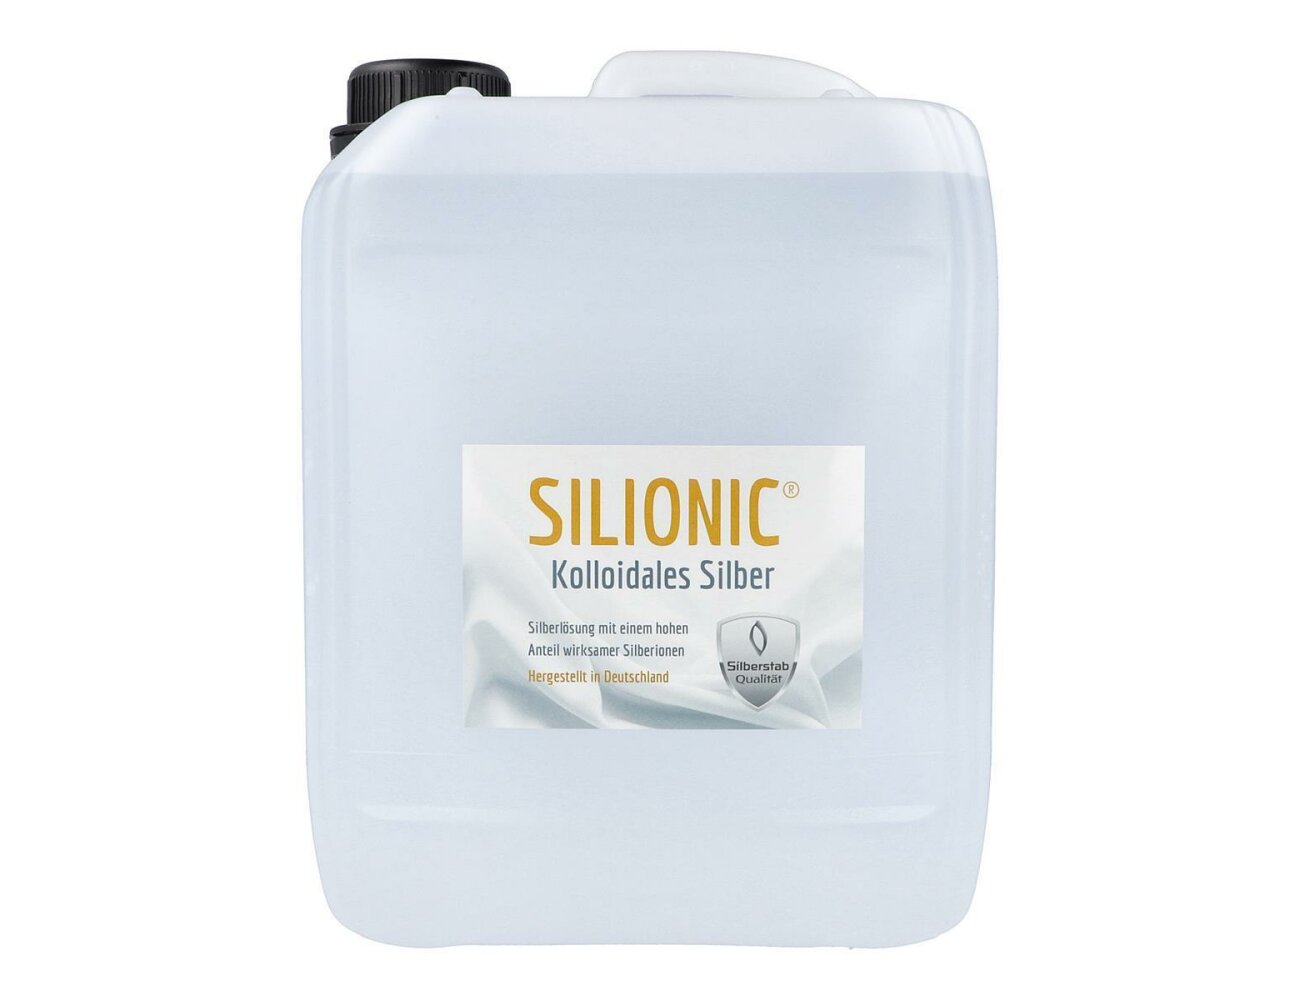 Silionic Kolloidales Silber, 10 ppm, 5 Liter